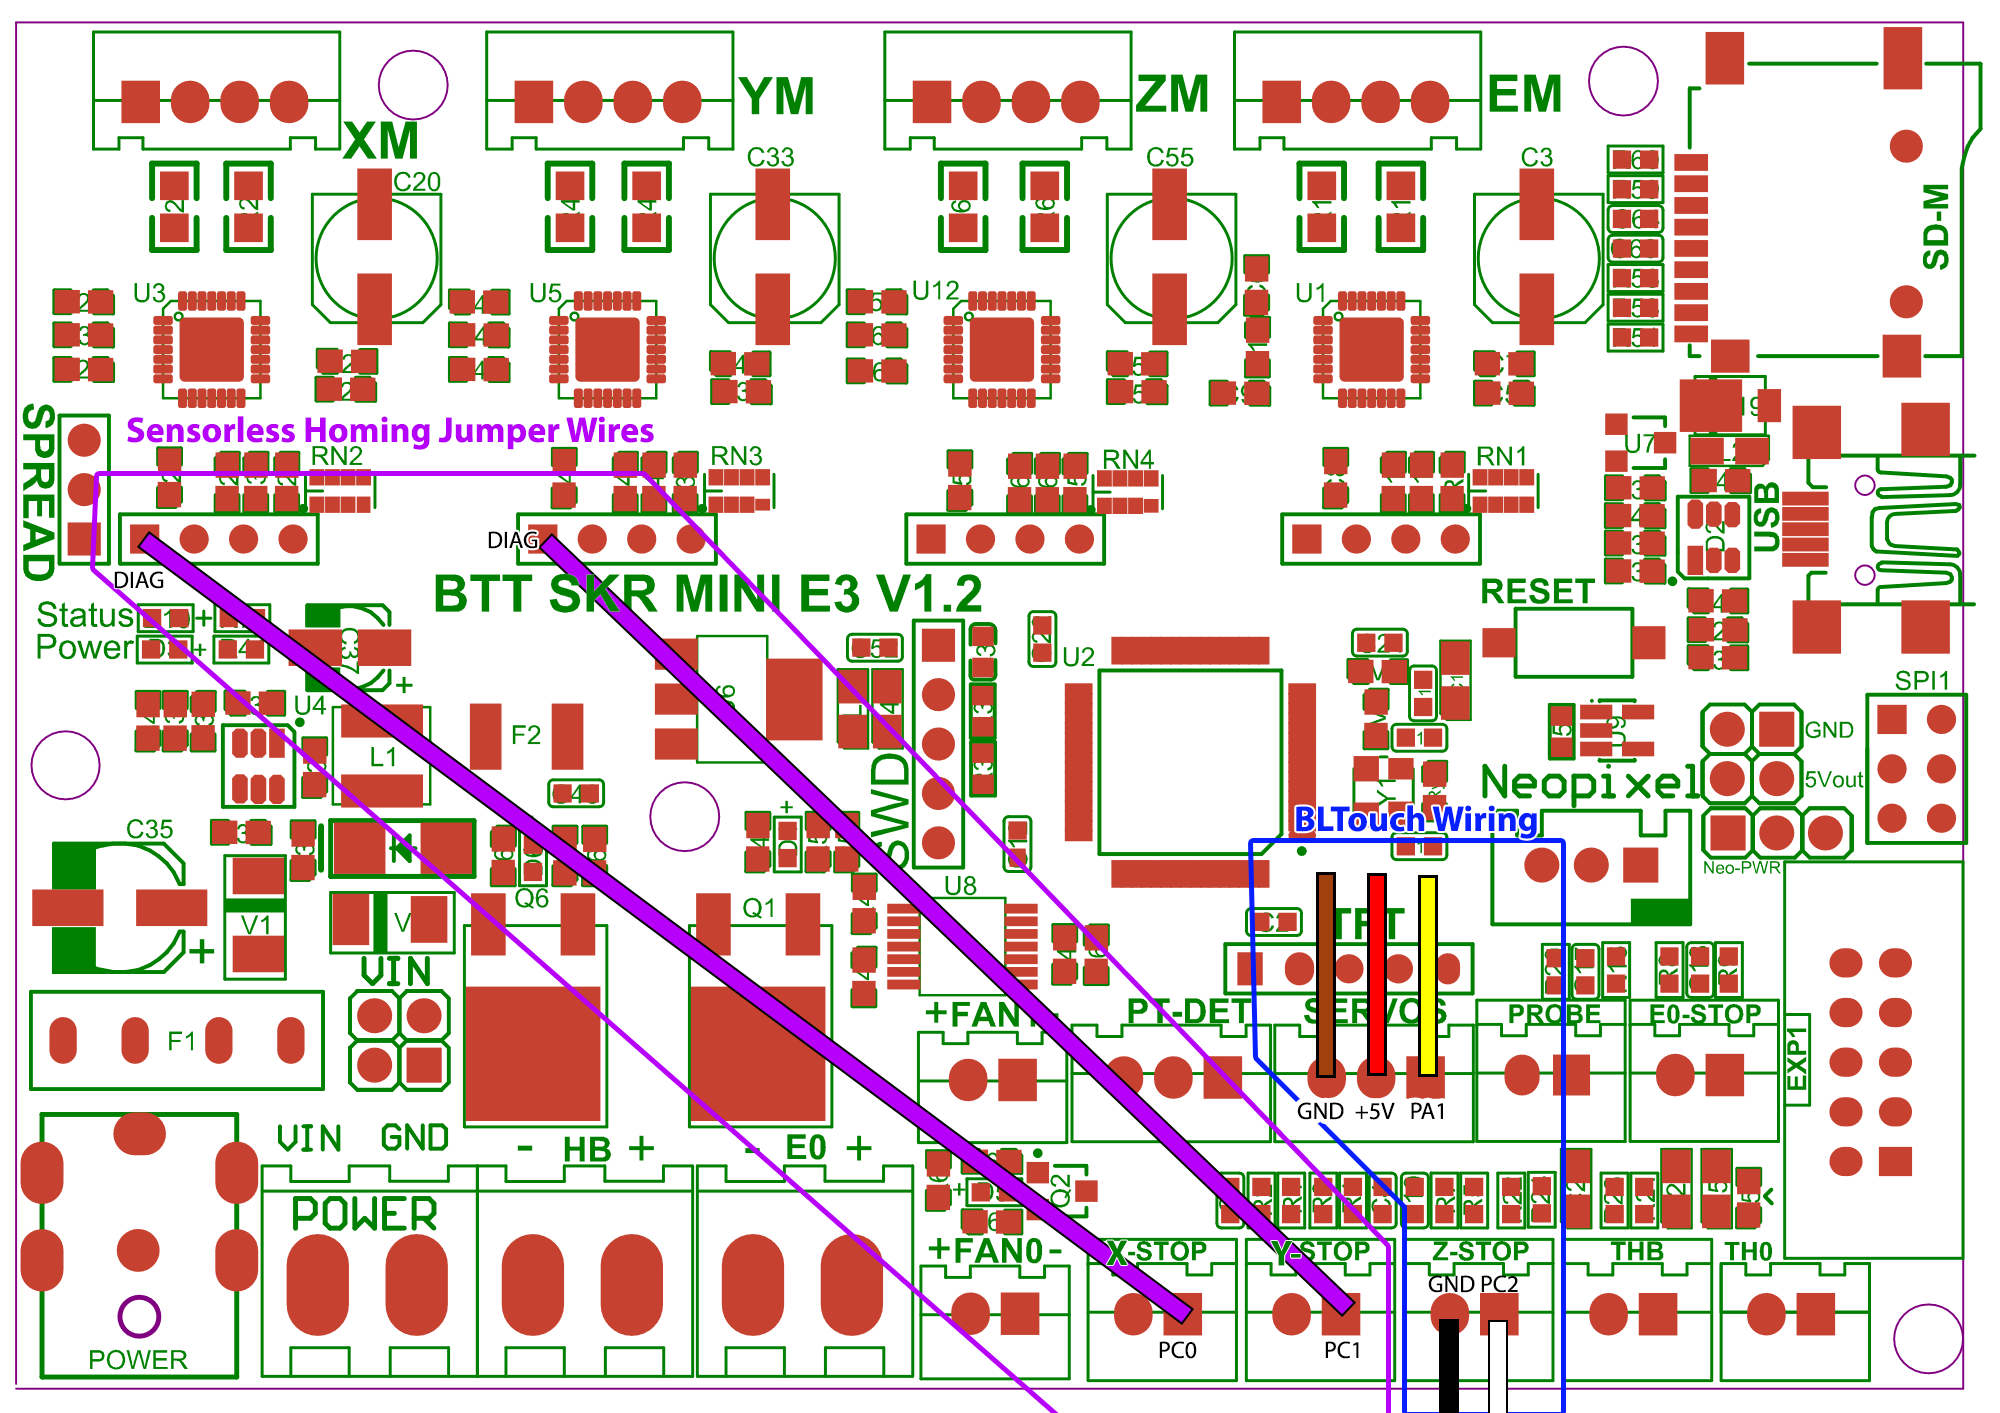 SKR Mini E3 V1.2 wire diagrame